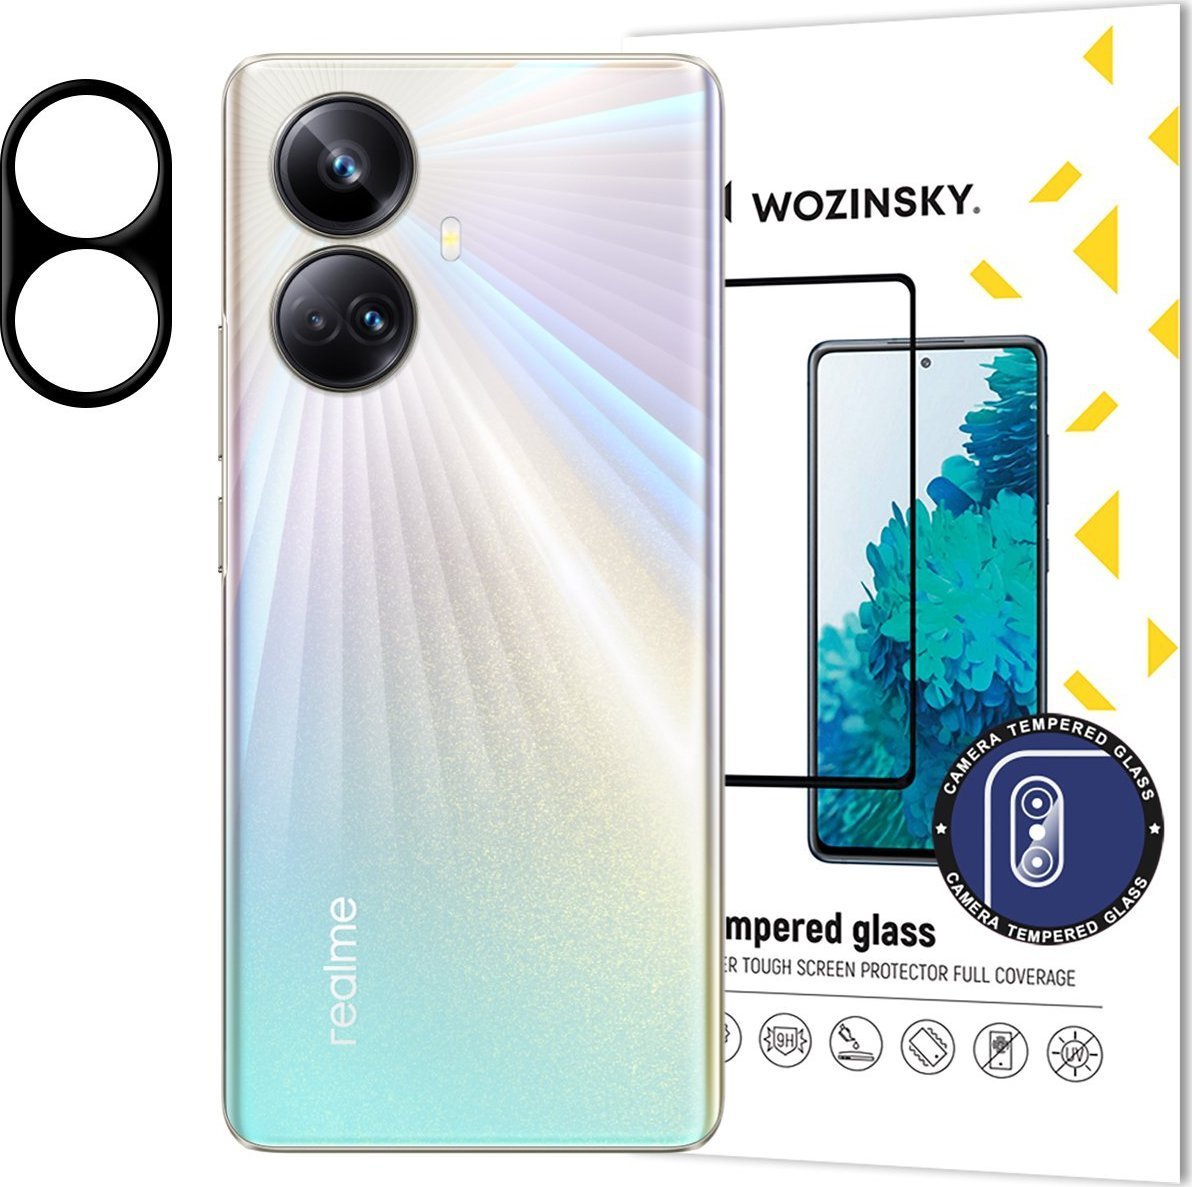 Wozinsky Wozinsky Full Camera Glass geamuri din sticla rezistente la zgarieturi pentru camera Realme 10 ProPlus Wozinsky Wozinsky Full Camera Glass este o sticla rezistenta la zgarieturi pentru camera Realme 10 Pro+, cu o rezistenta de 9H, ce prote